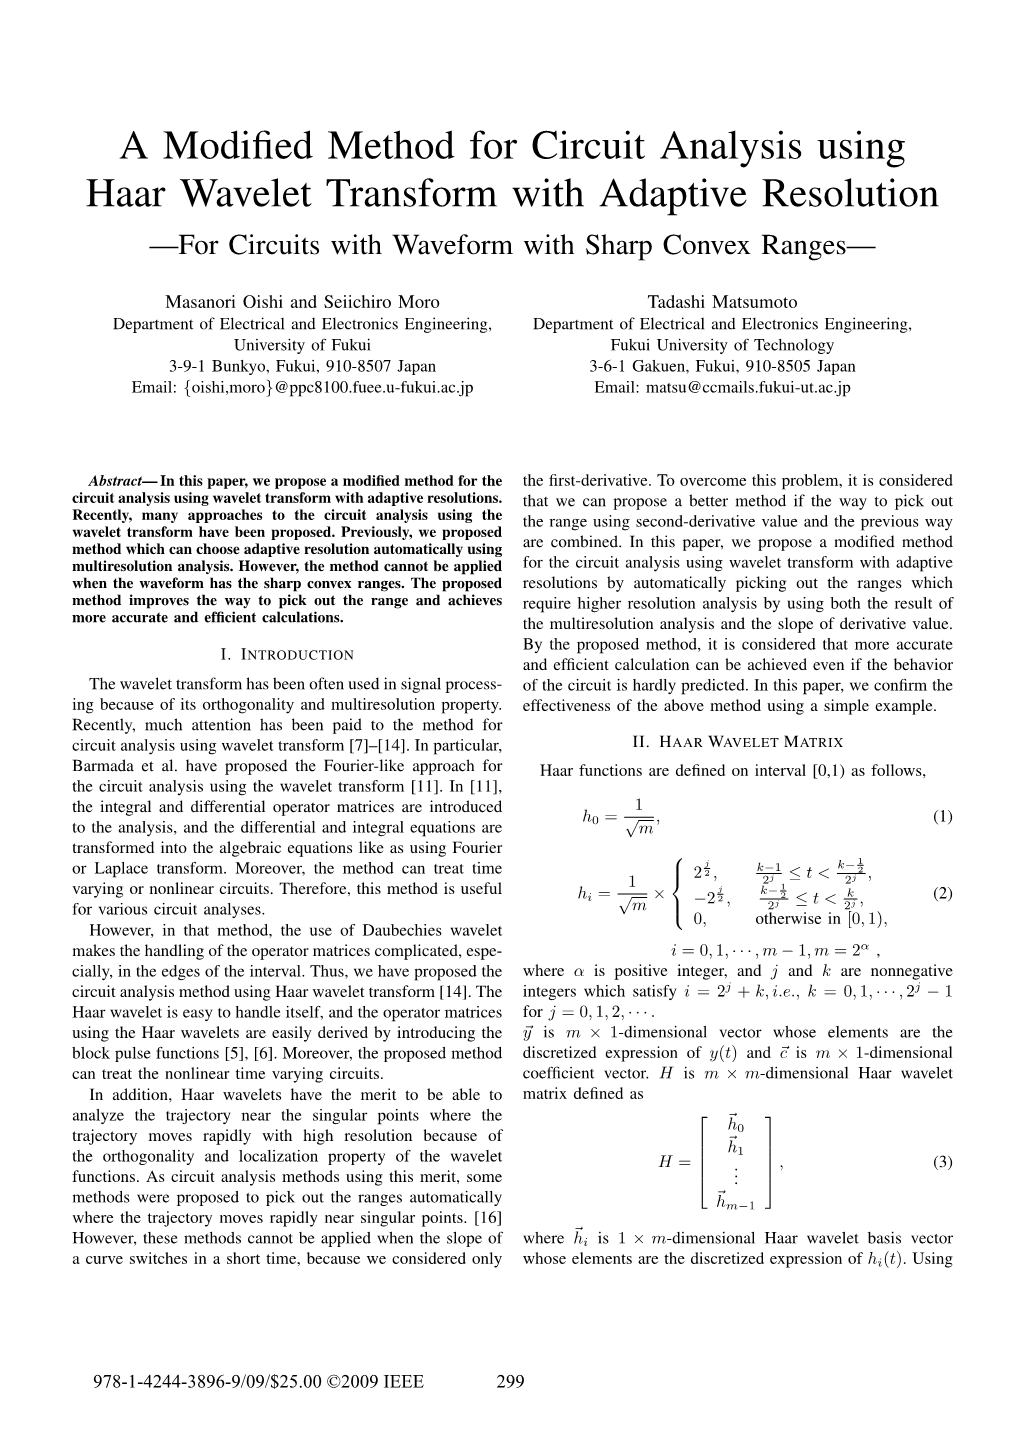 A Modified Method for Circuit Analysis Using Haar Wavelet